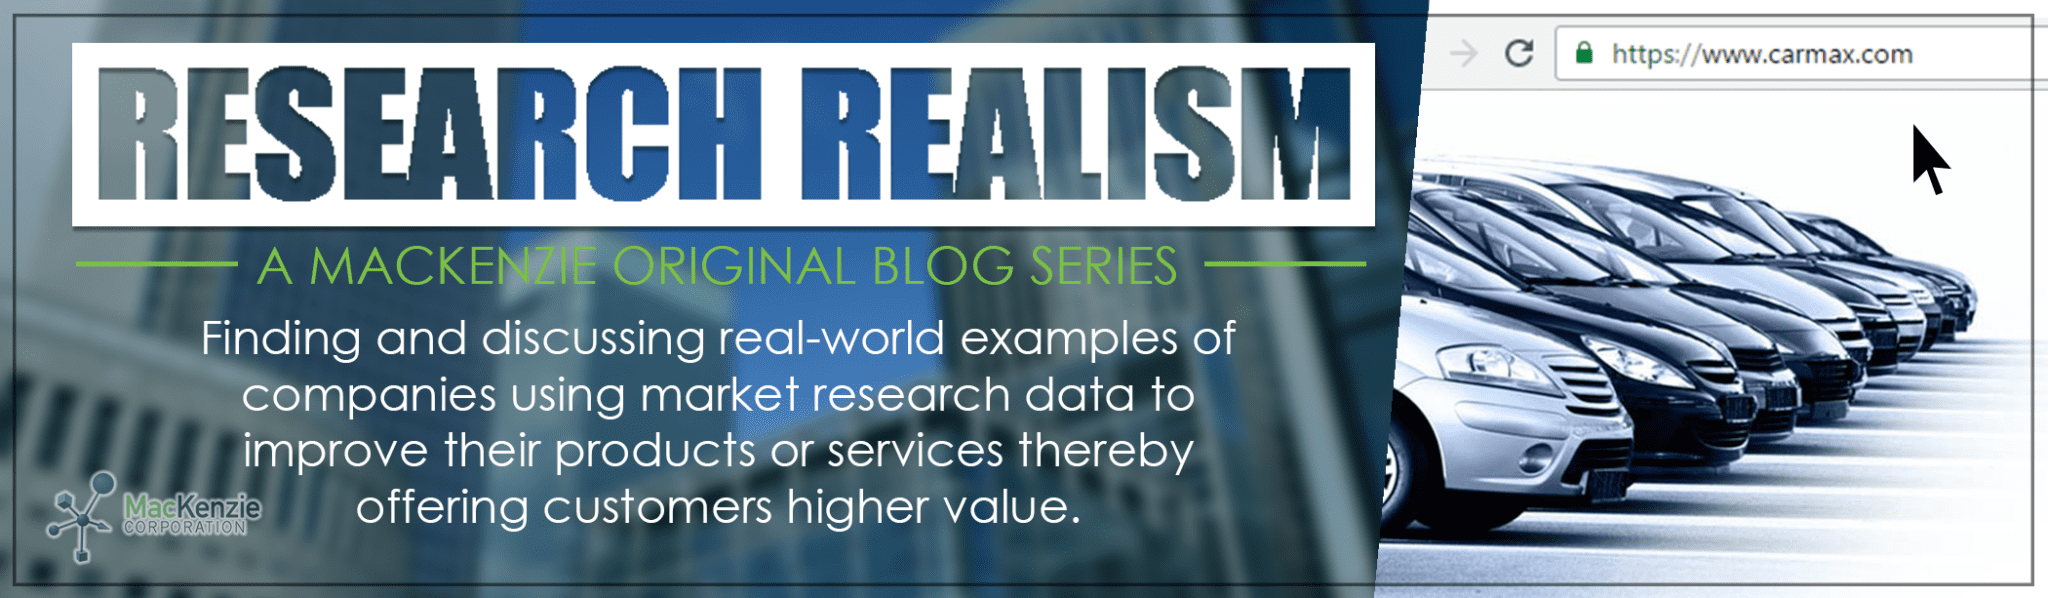 Research Realism: CarMax